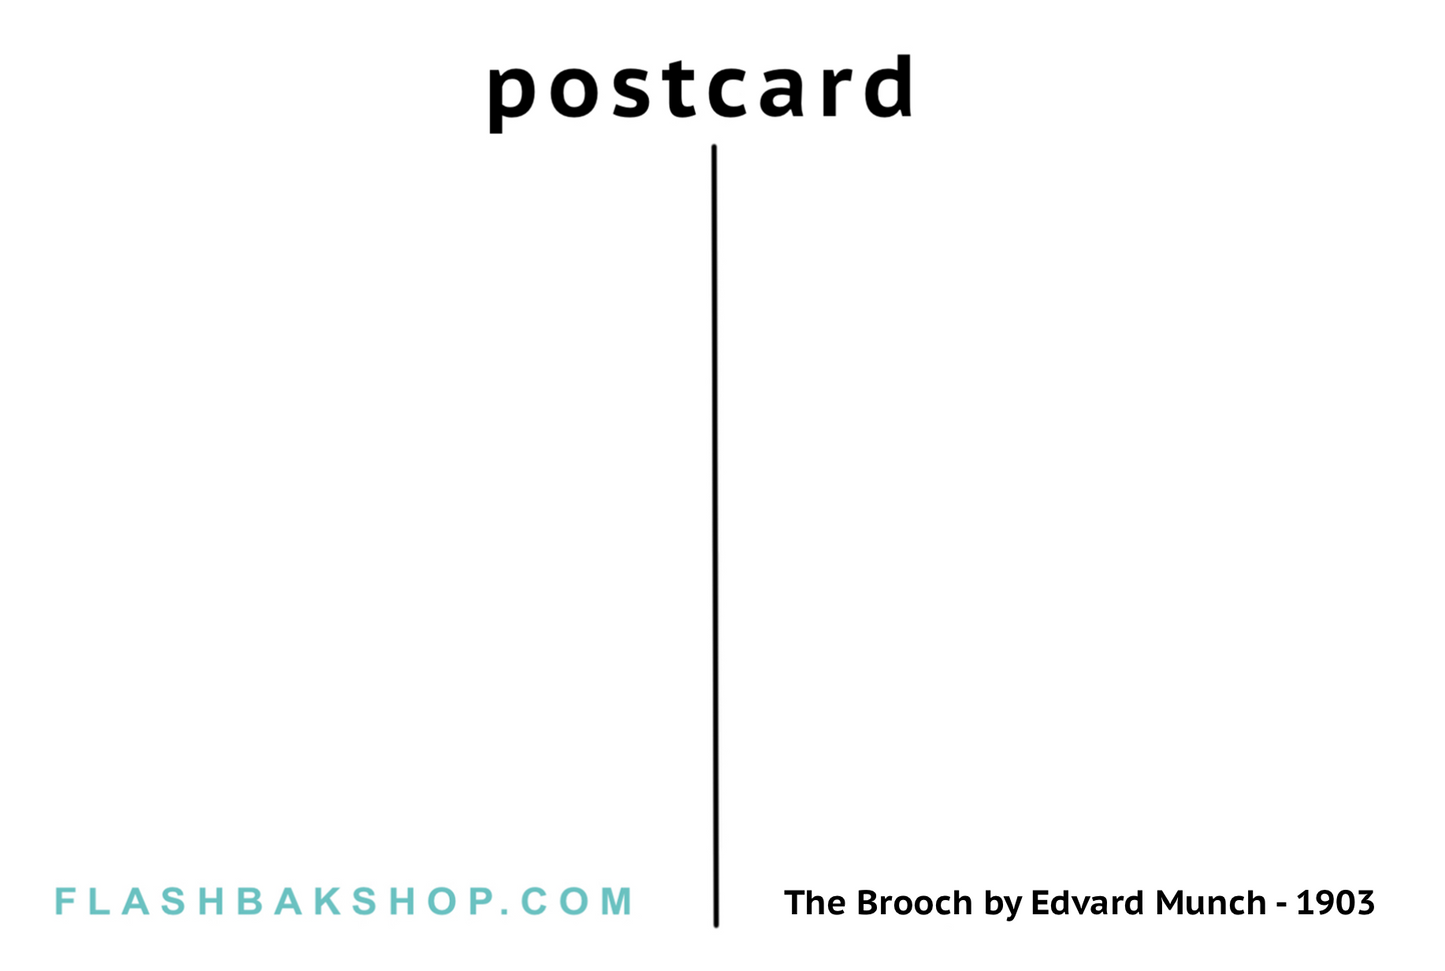 The Brooch by Edvard Munch, 1903 - Postcard